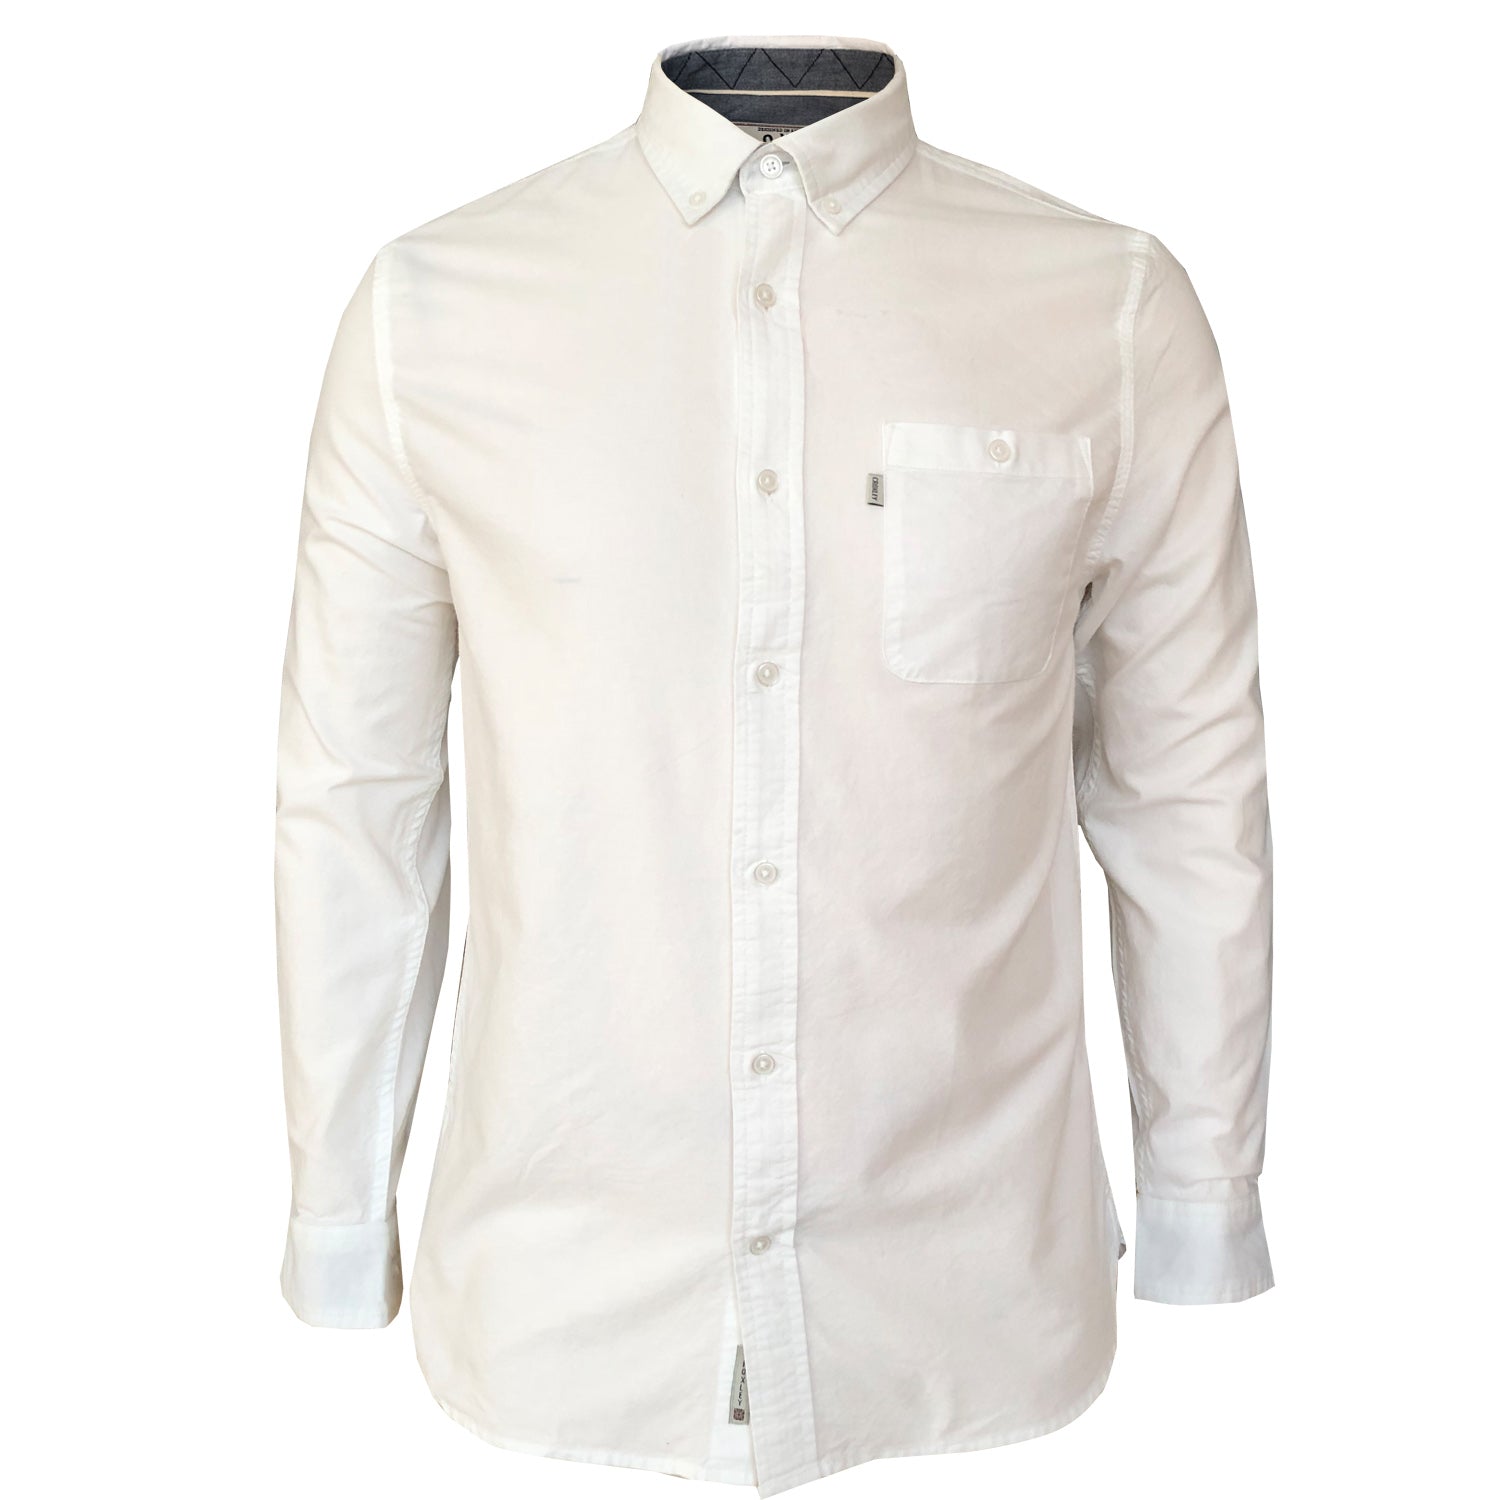 Croxley - Oxford Long Sleeve Shirt - LabelledUp.com